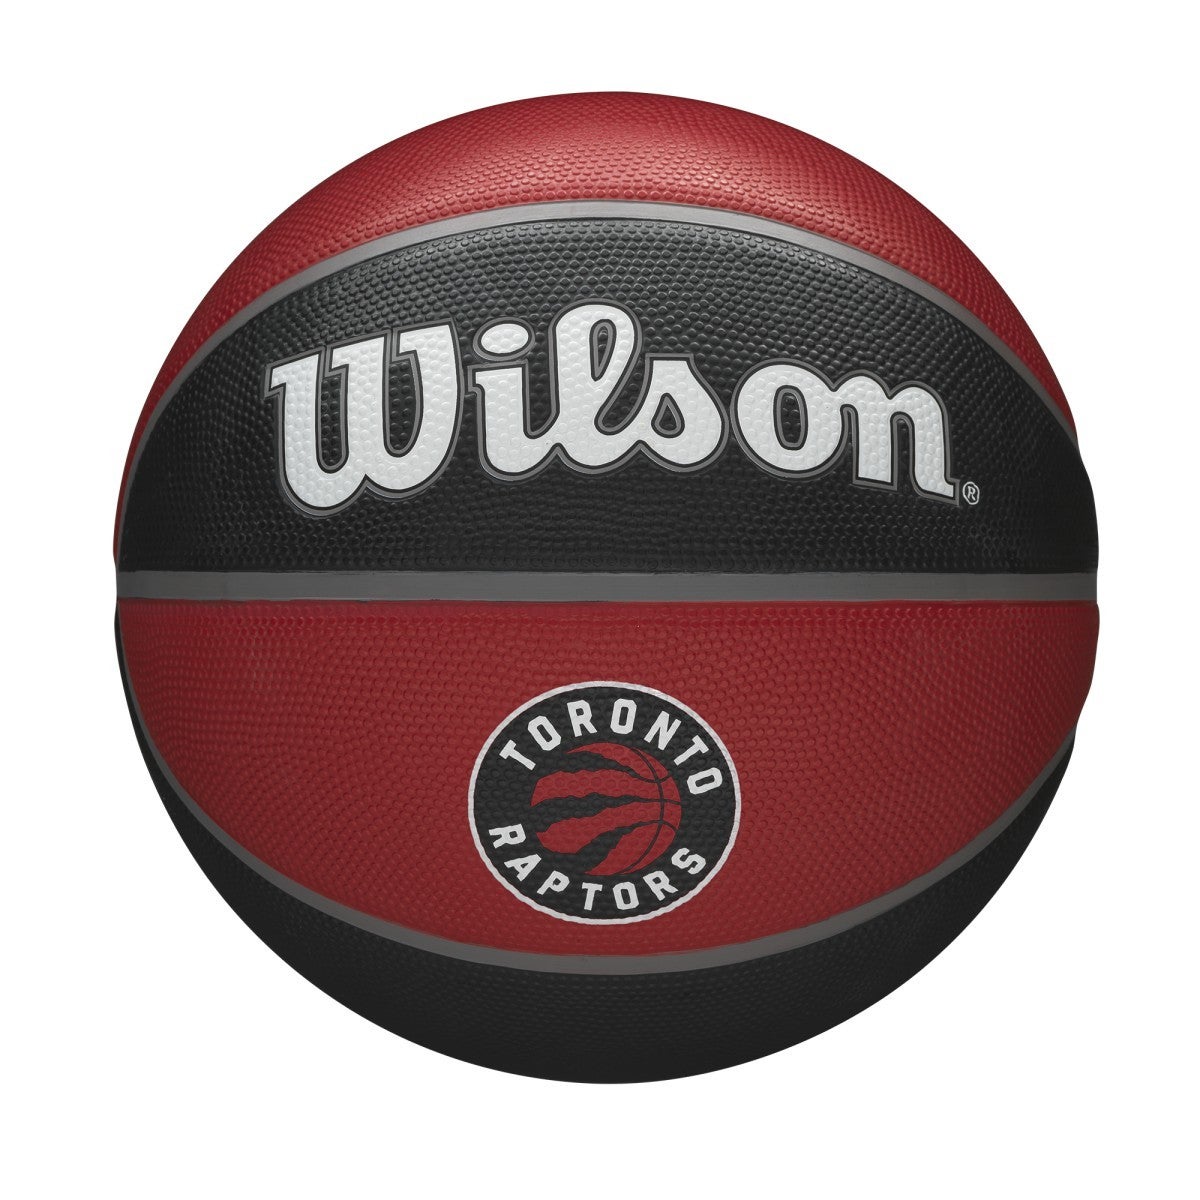 Wilson NBA Team Tribute Basketball - Size 7 – Ernie's Sports Experts